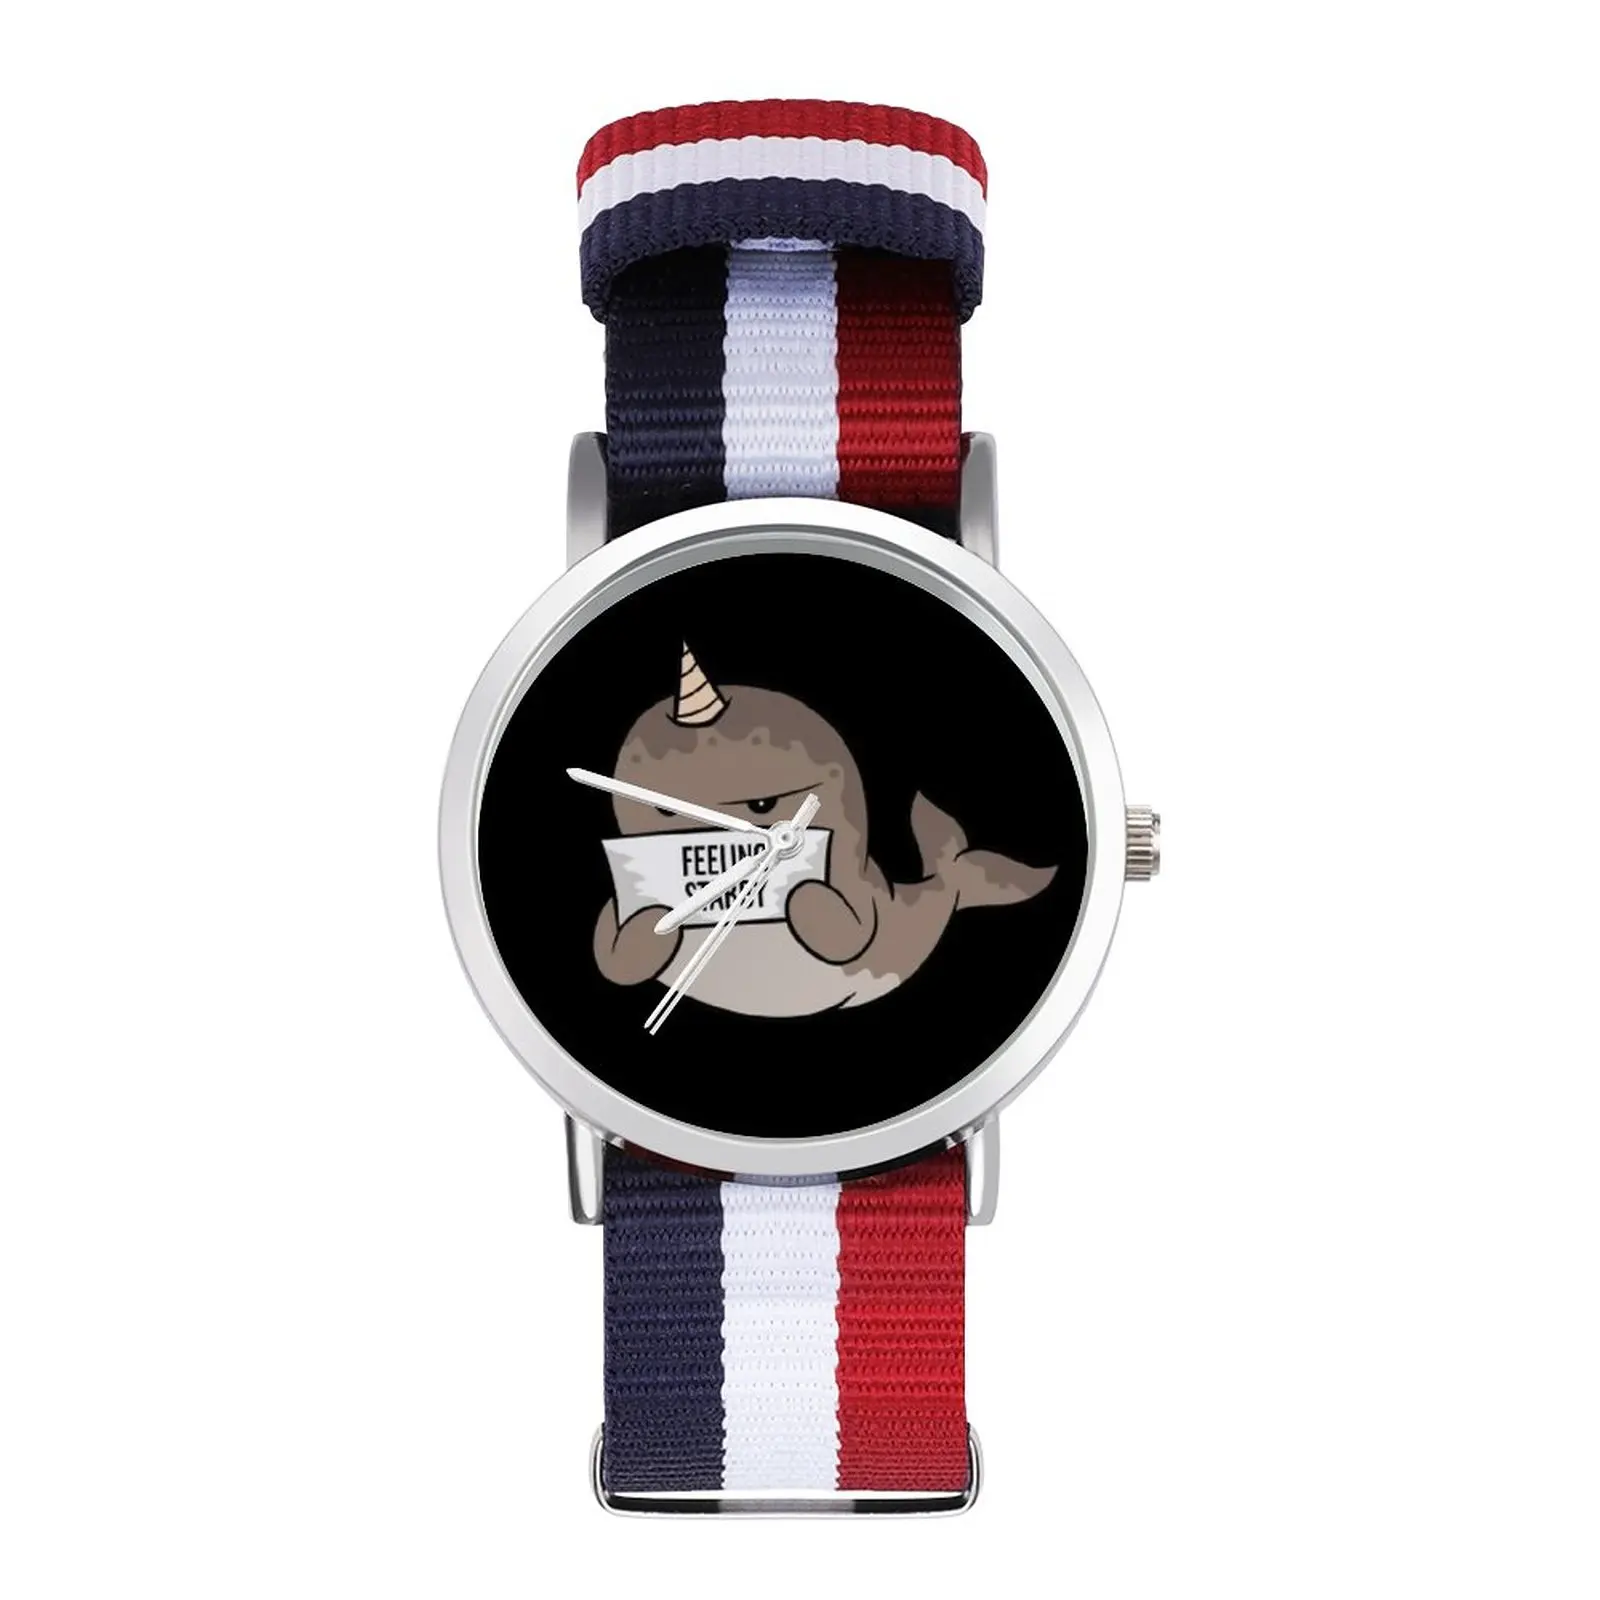 Narwhal Quartz Watch Design Lady Wrist Watch Sport Casual Fashion Wristwatch